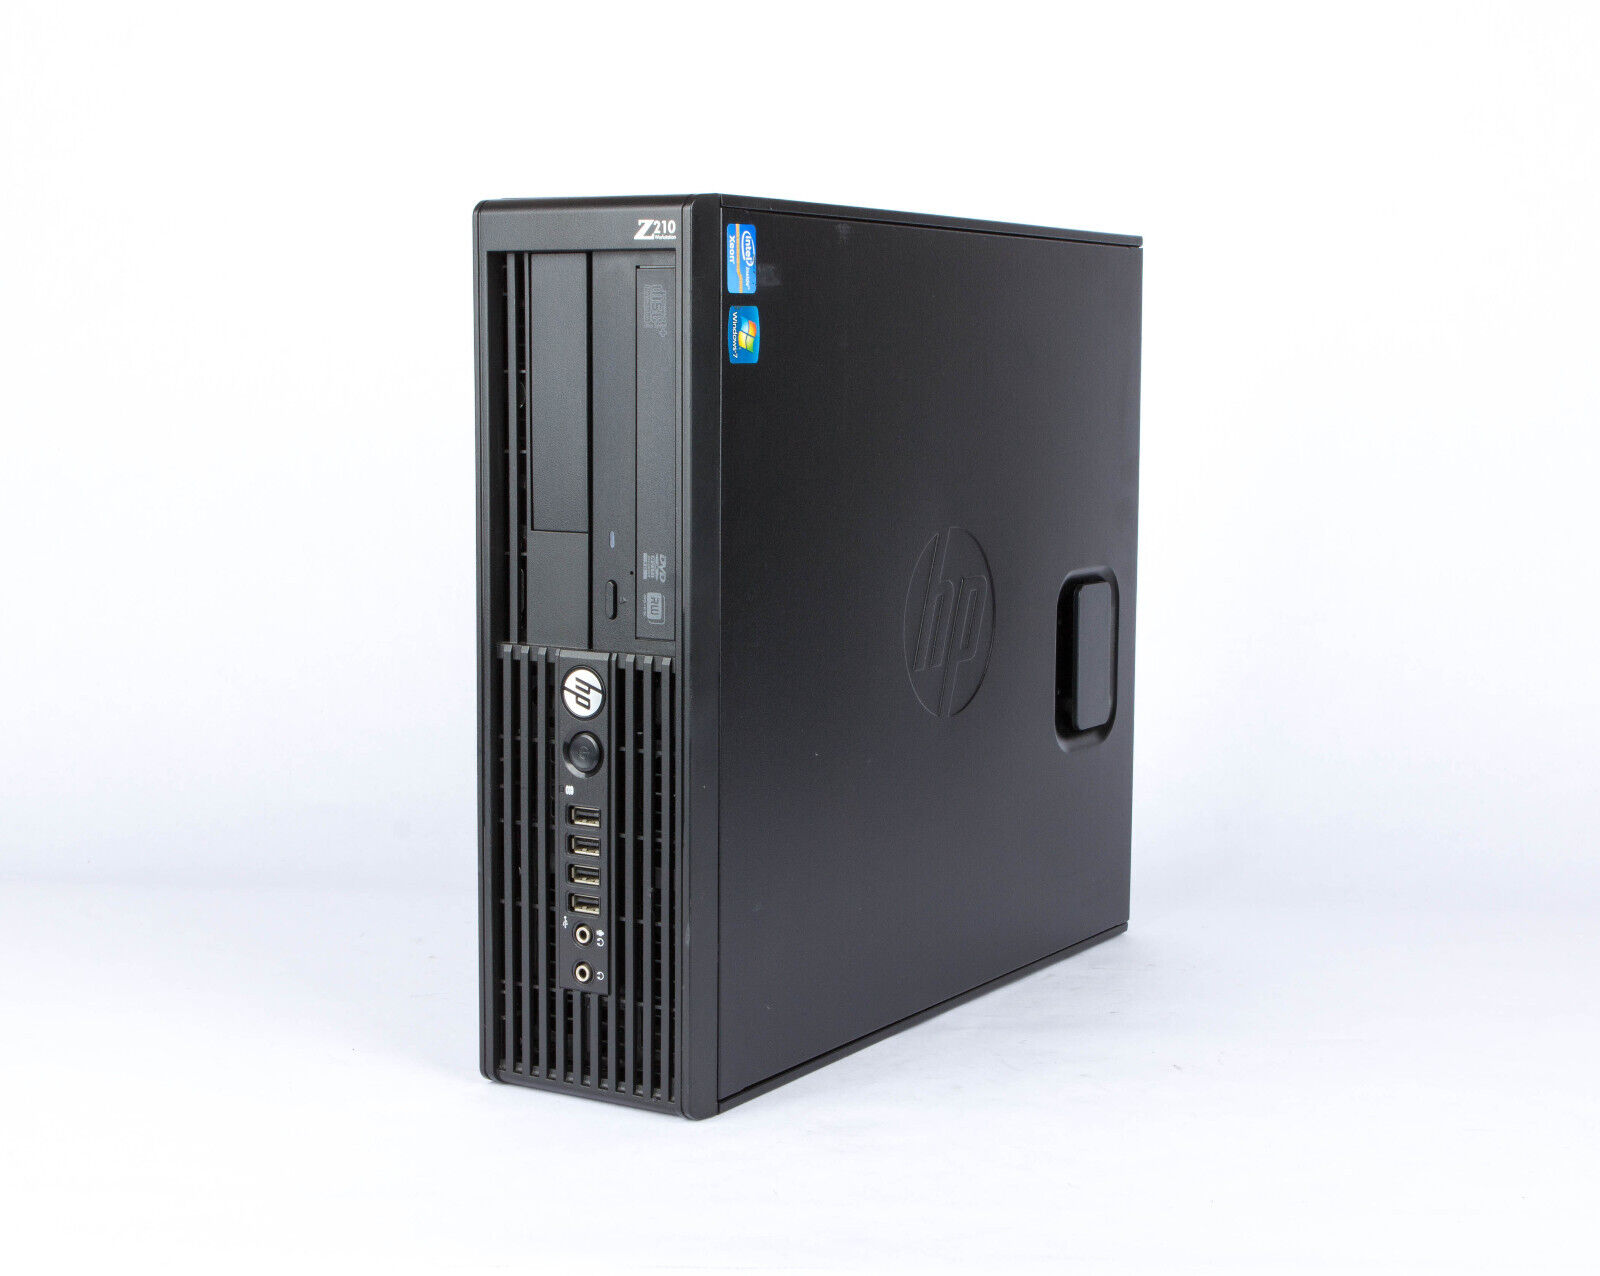 HP Z210 Workstation Xeon E31240 3.30 GHz 4GB RAM 250GB HDD WinXP Pro SP3 32-bit